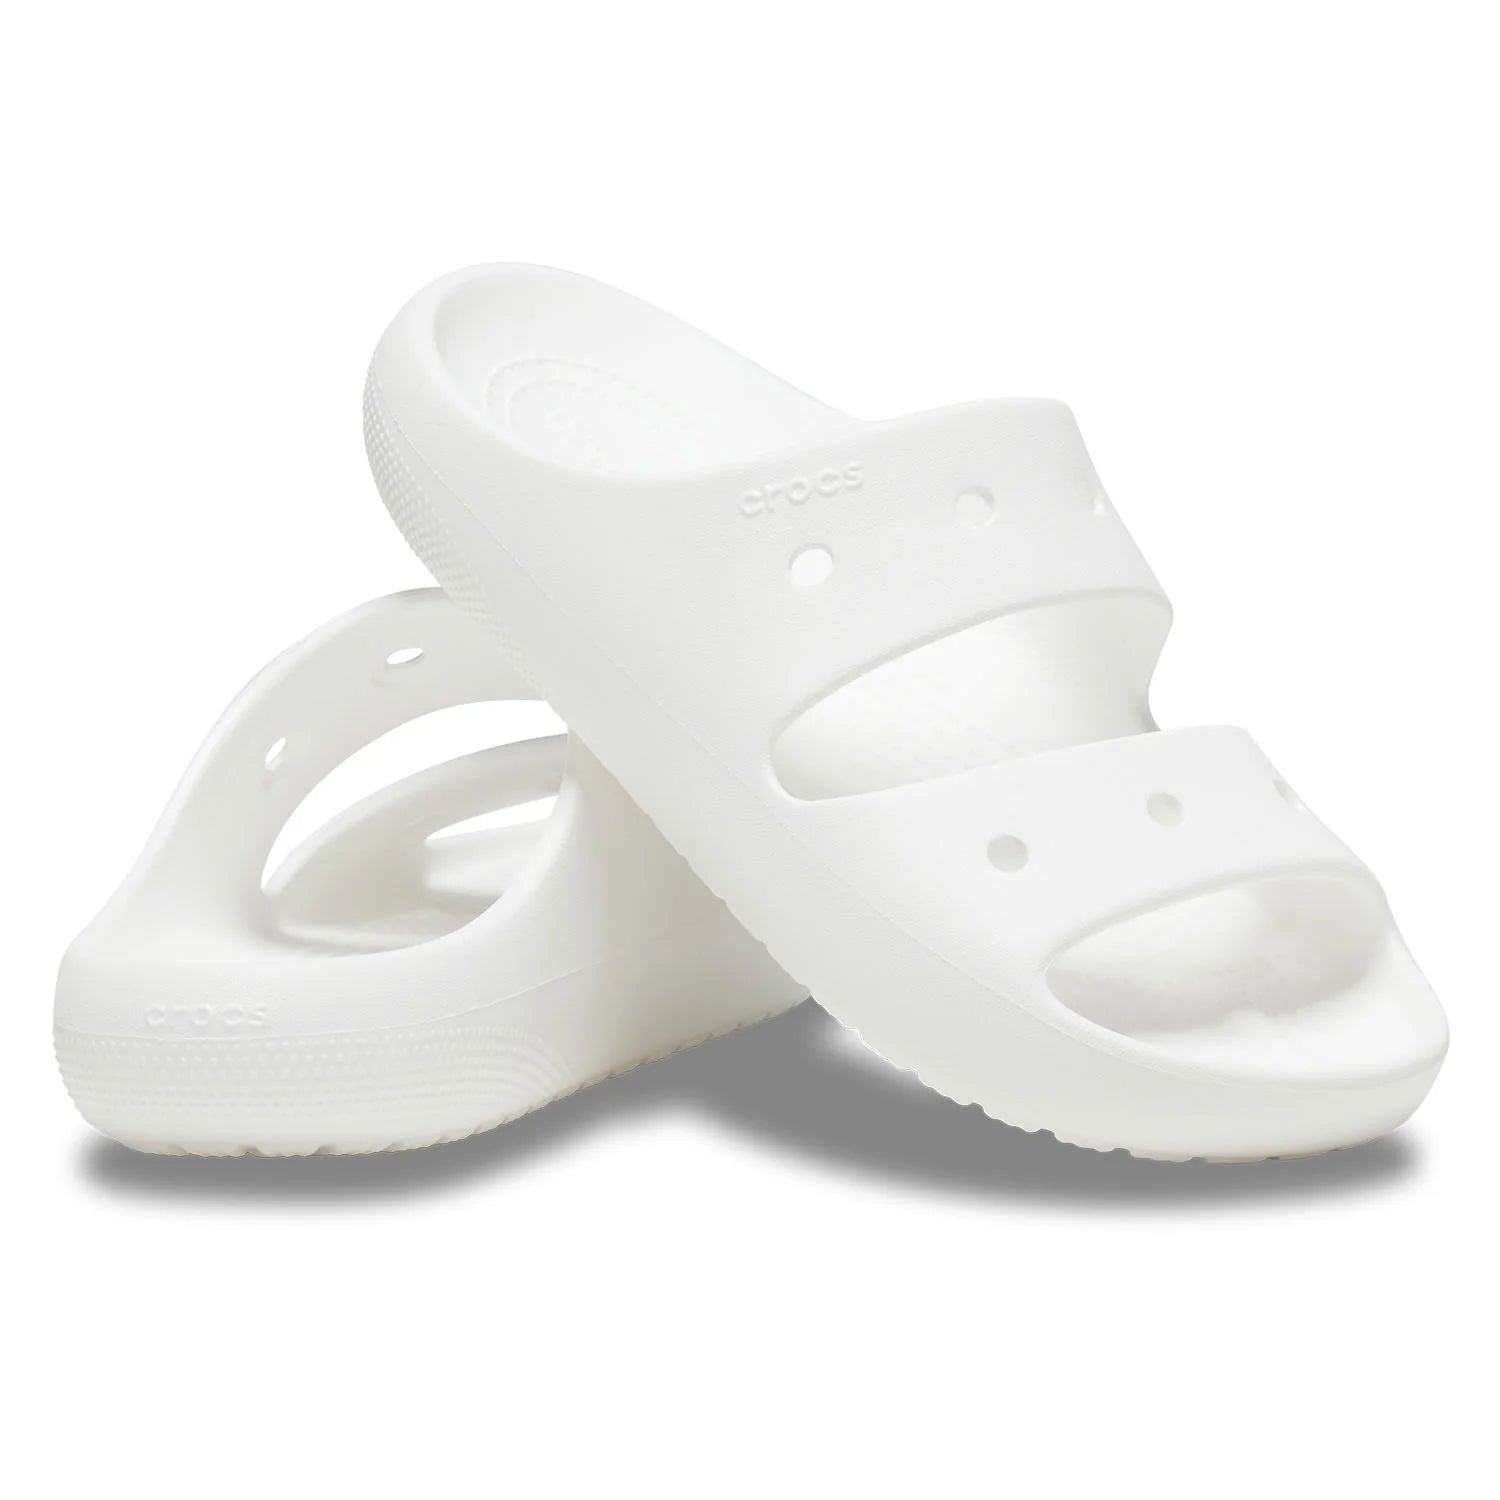 Crocs Unisex Classic V2 Sandals